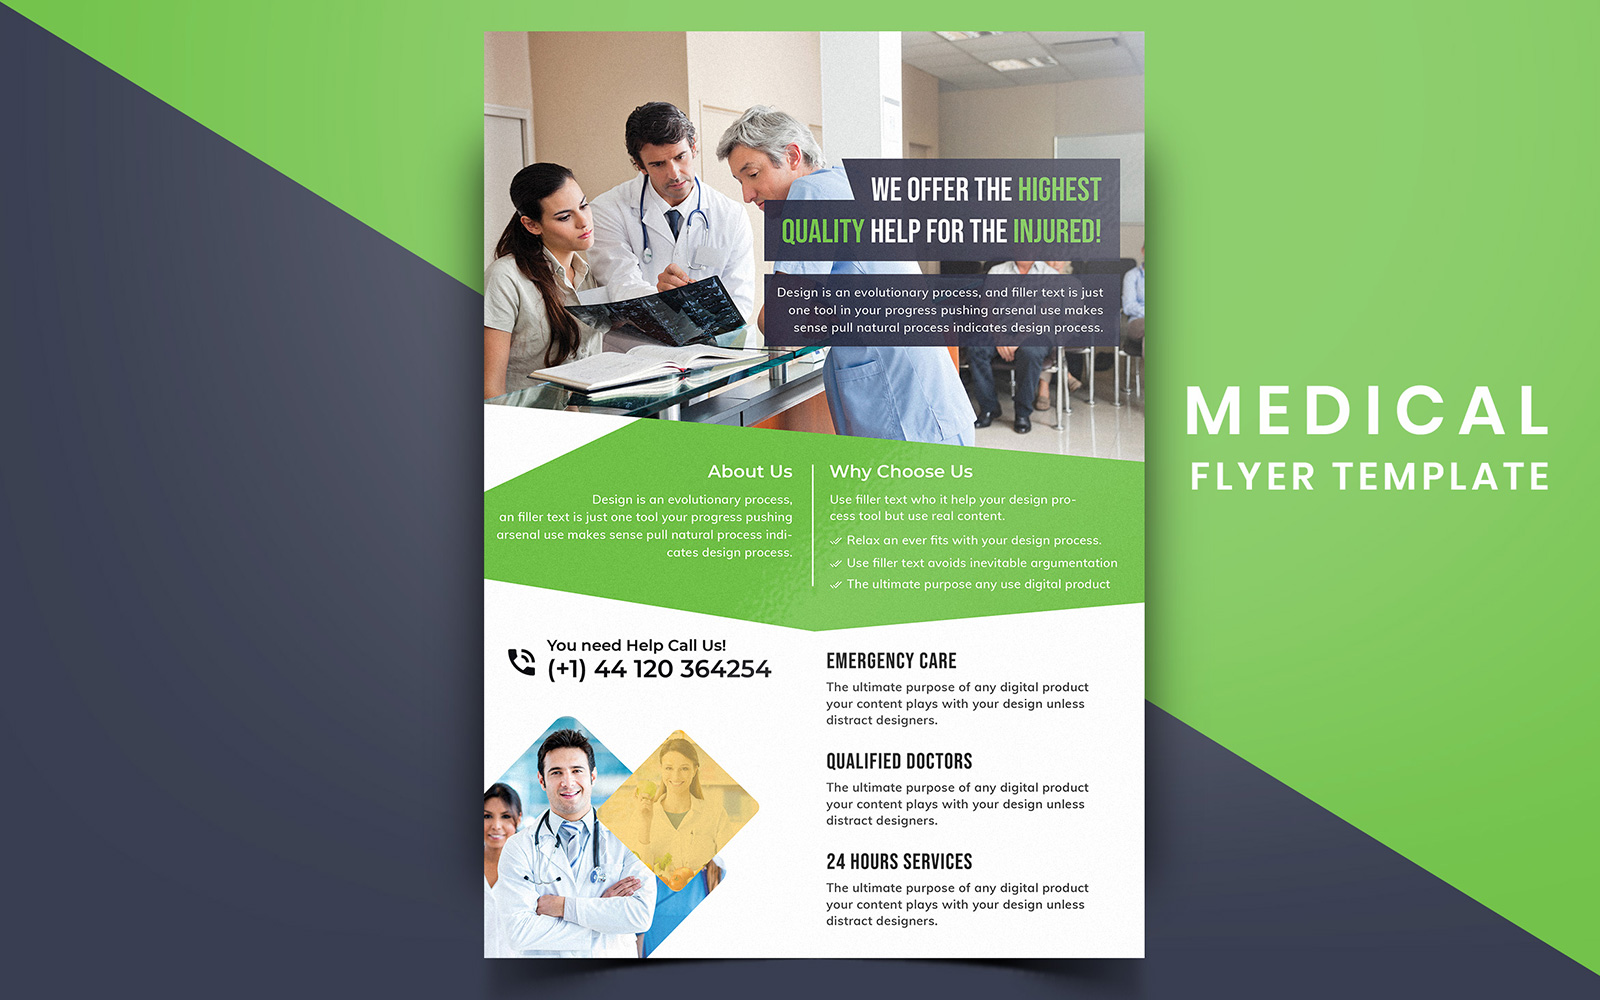 Raise - Medical Flyer Design - Corporate Identity Template